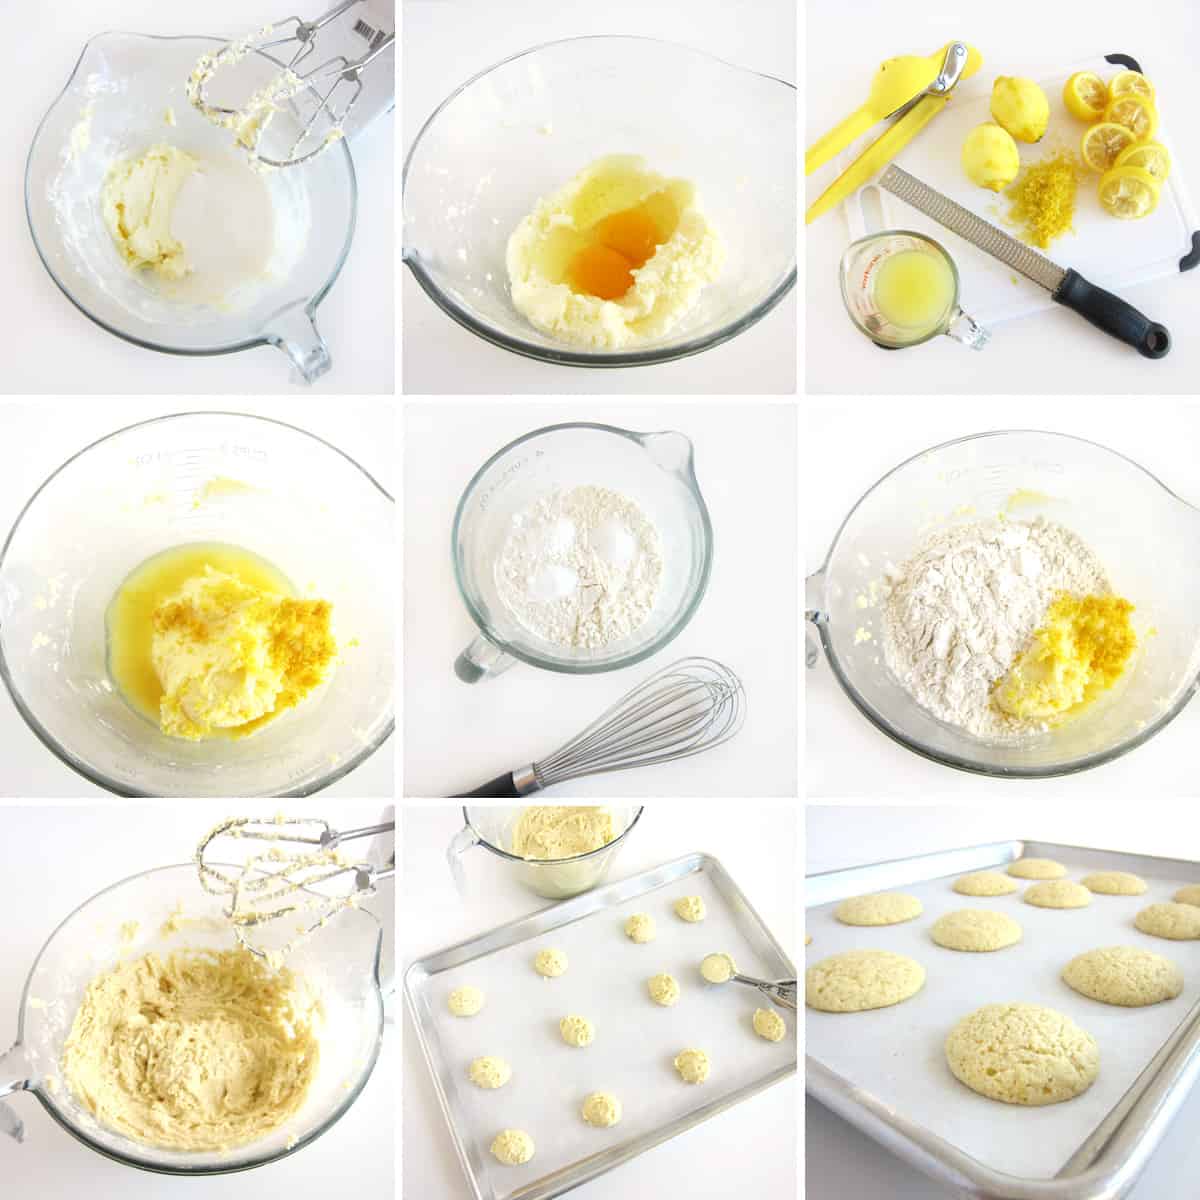 Make lemon cookies by mixing butter, sugar, eggs. lemon juice, lemon zest, flour, salt, baking soda, and baking powder together.